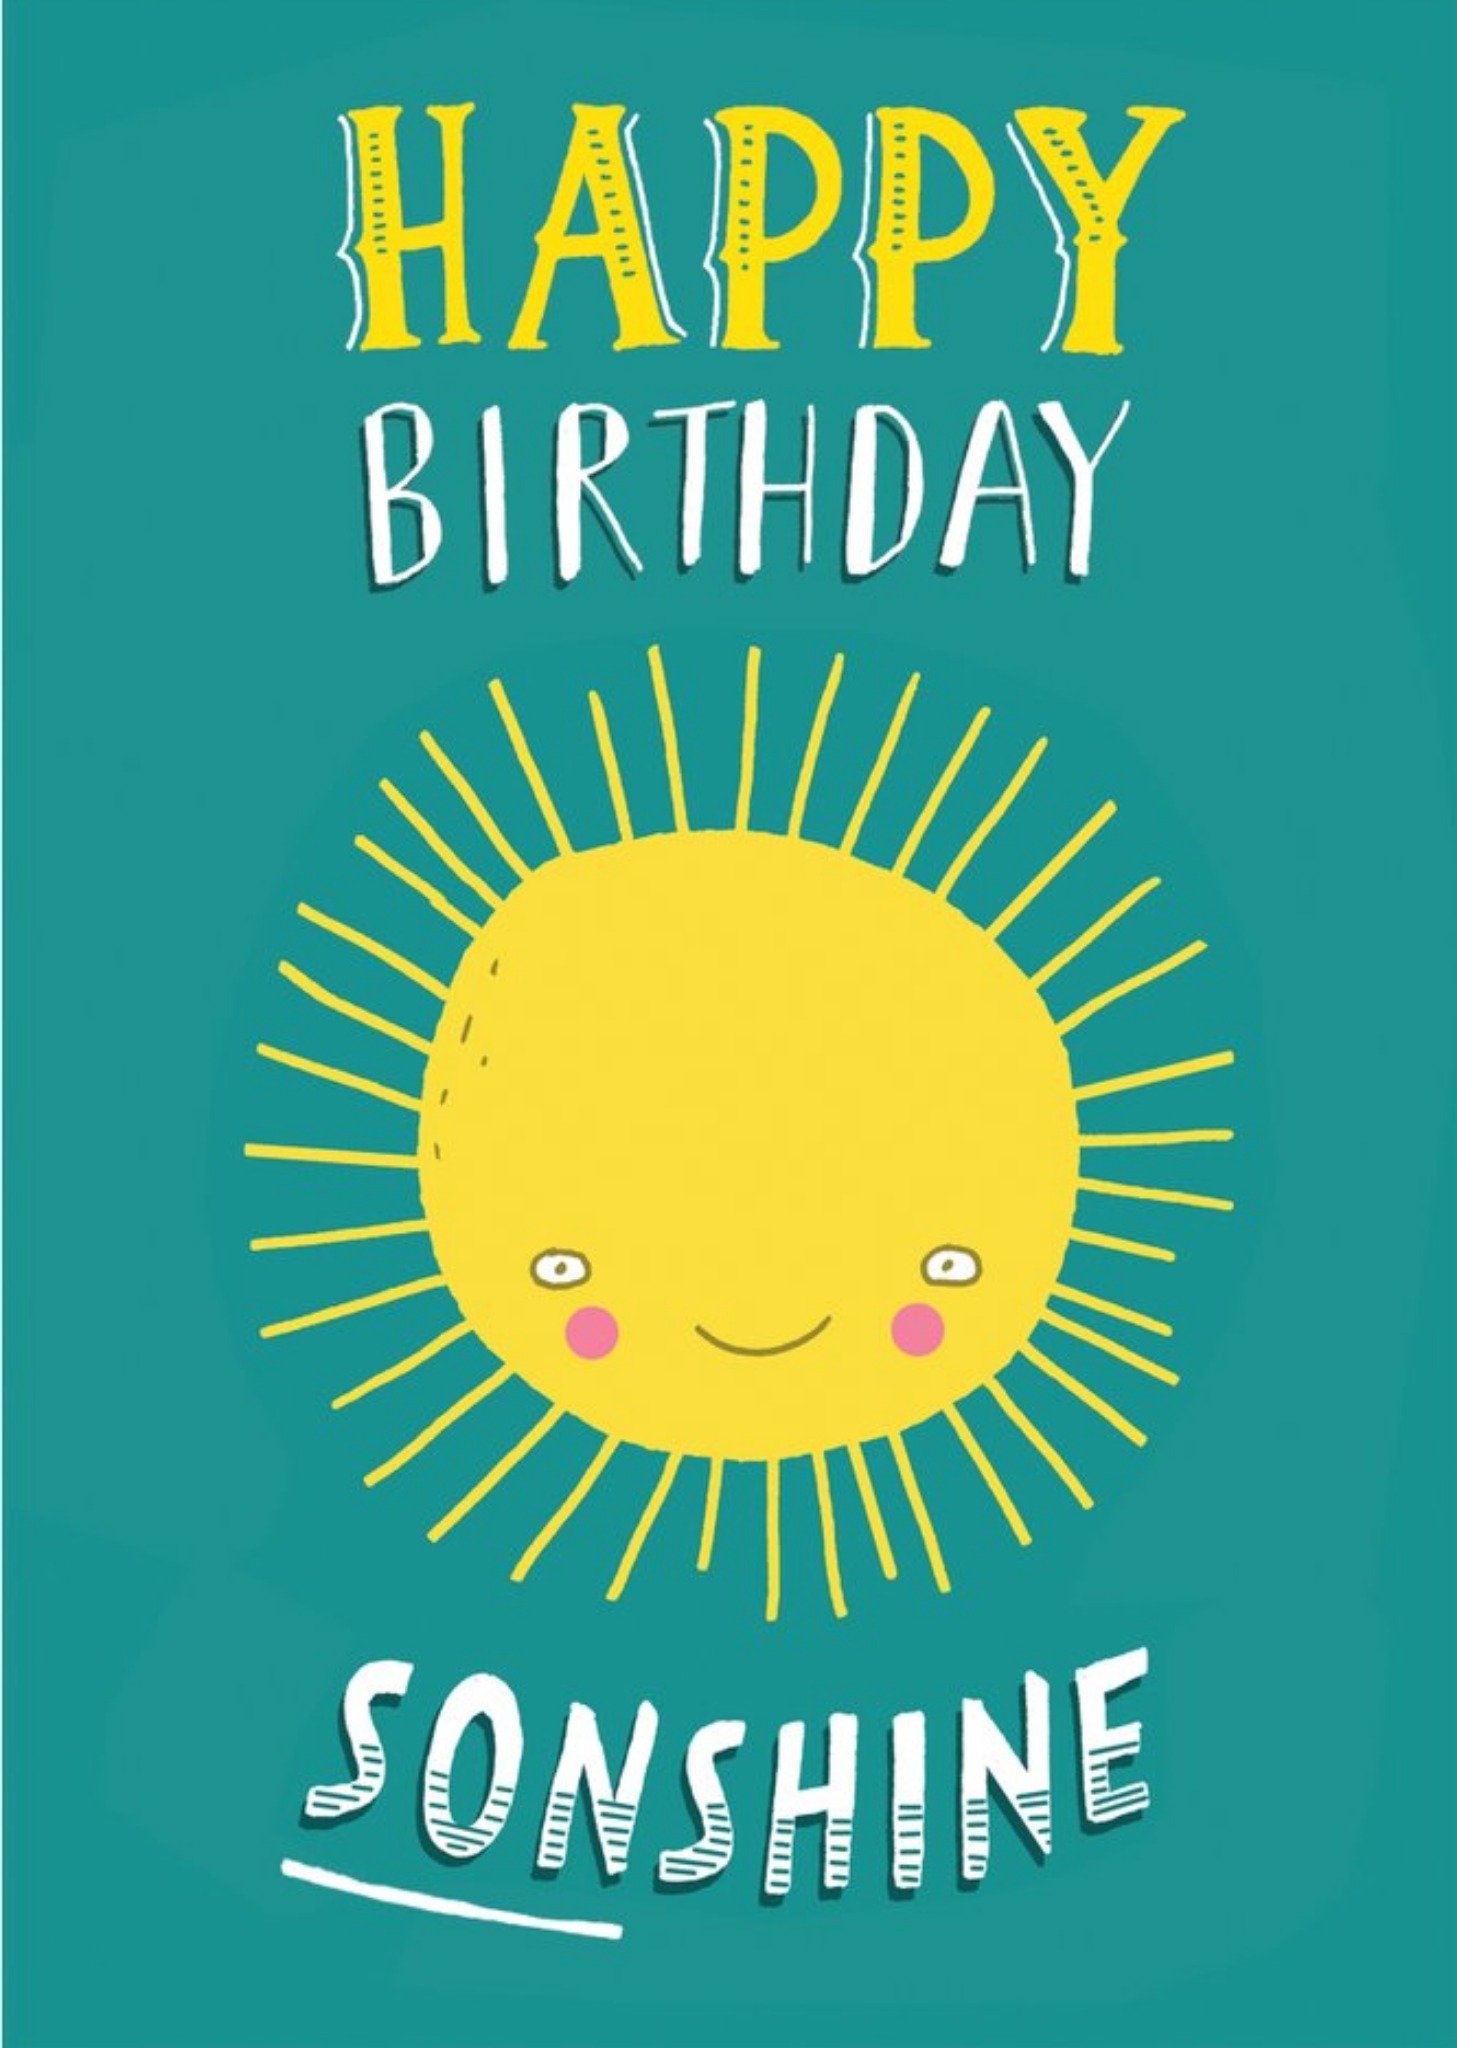 Moonpig Brainbox Candy Sun Son Happy Birthday Card, Large